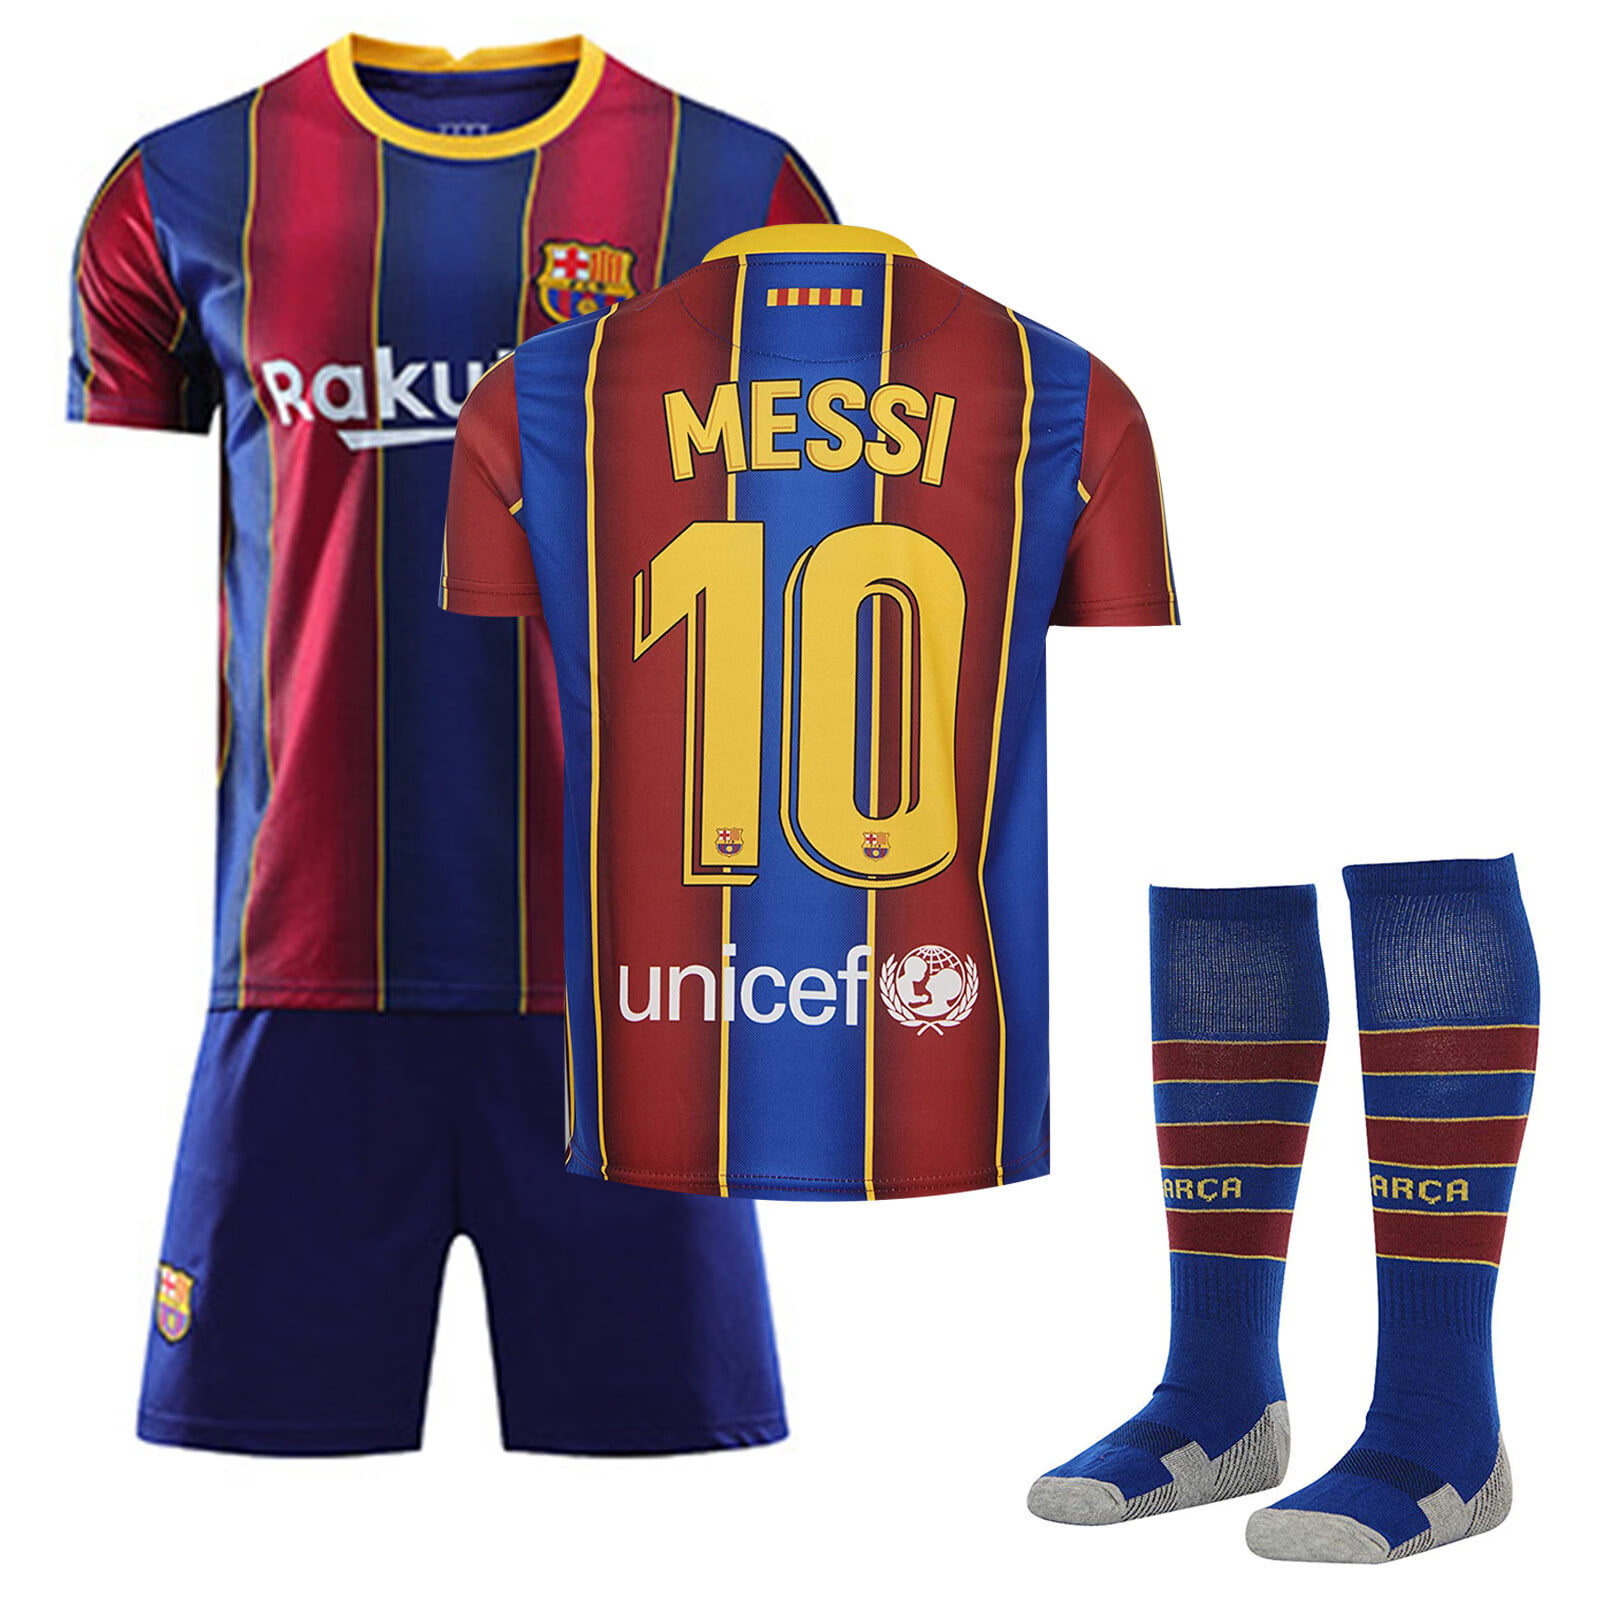 Messi 2020 Barcelona Official Home 2019 2020 Jersey in Blister Pack Barcelona 10 Children Boys Adult 